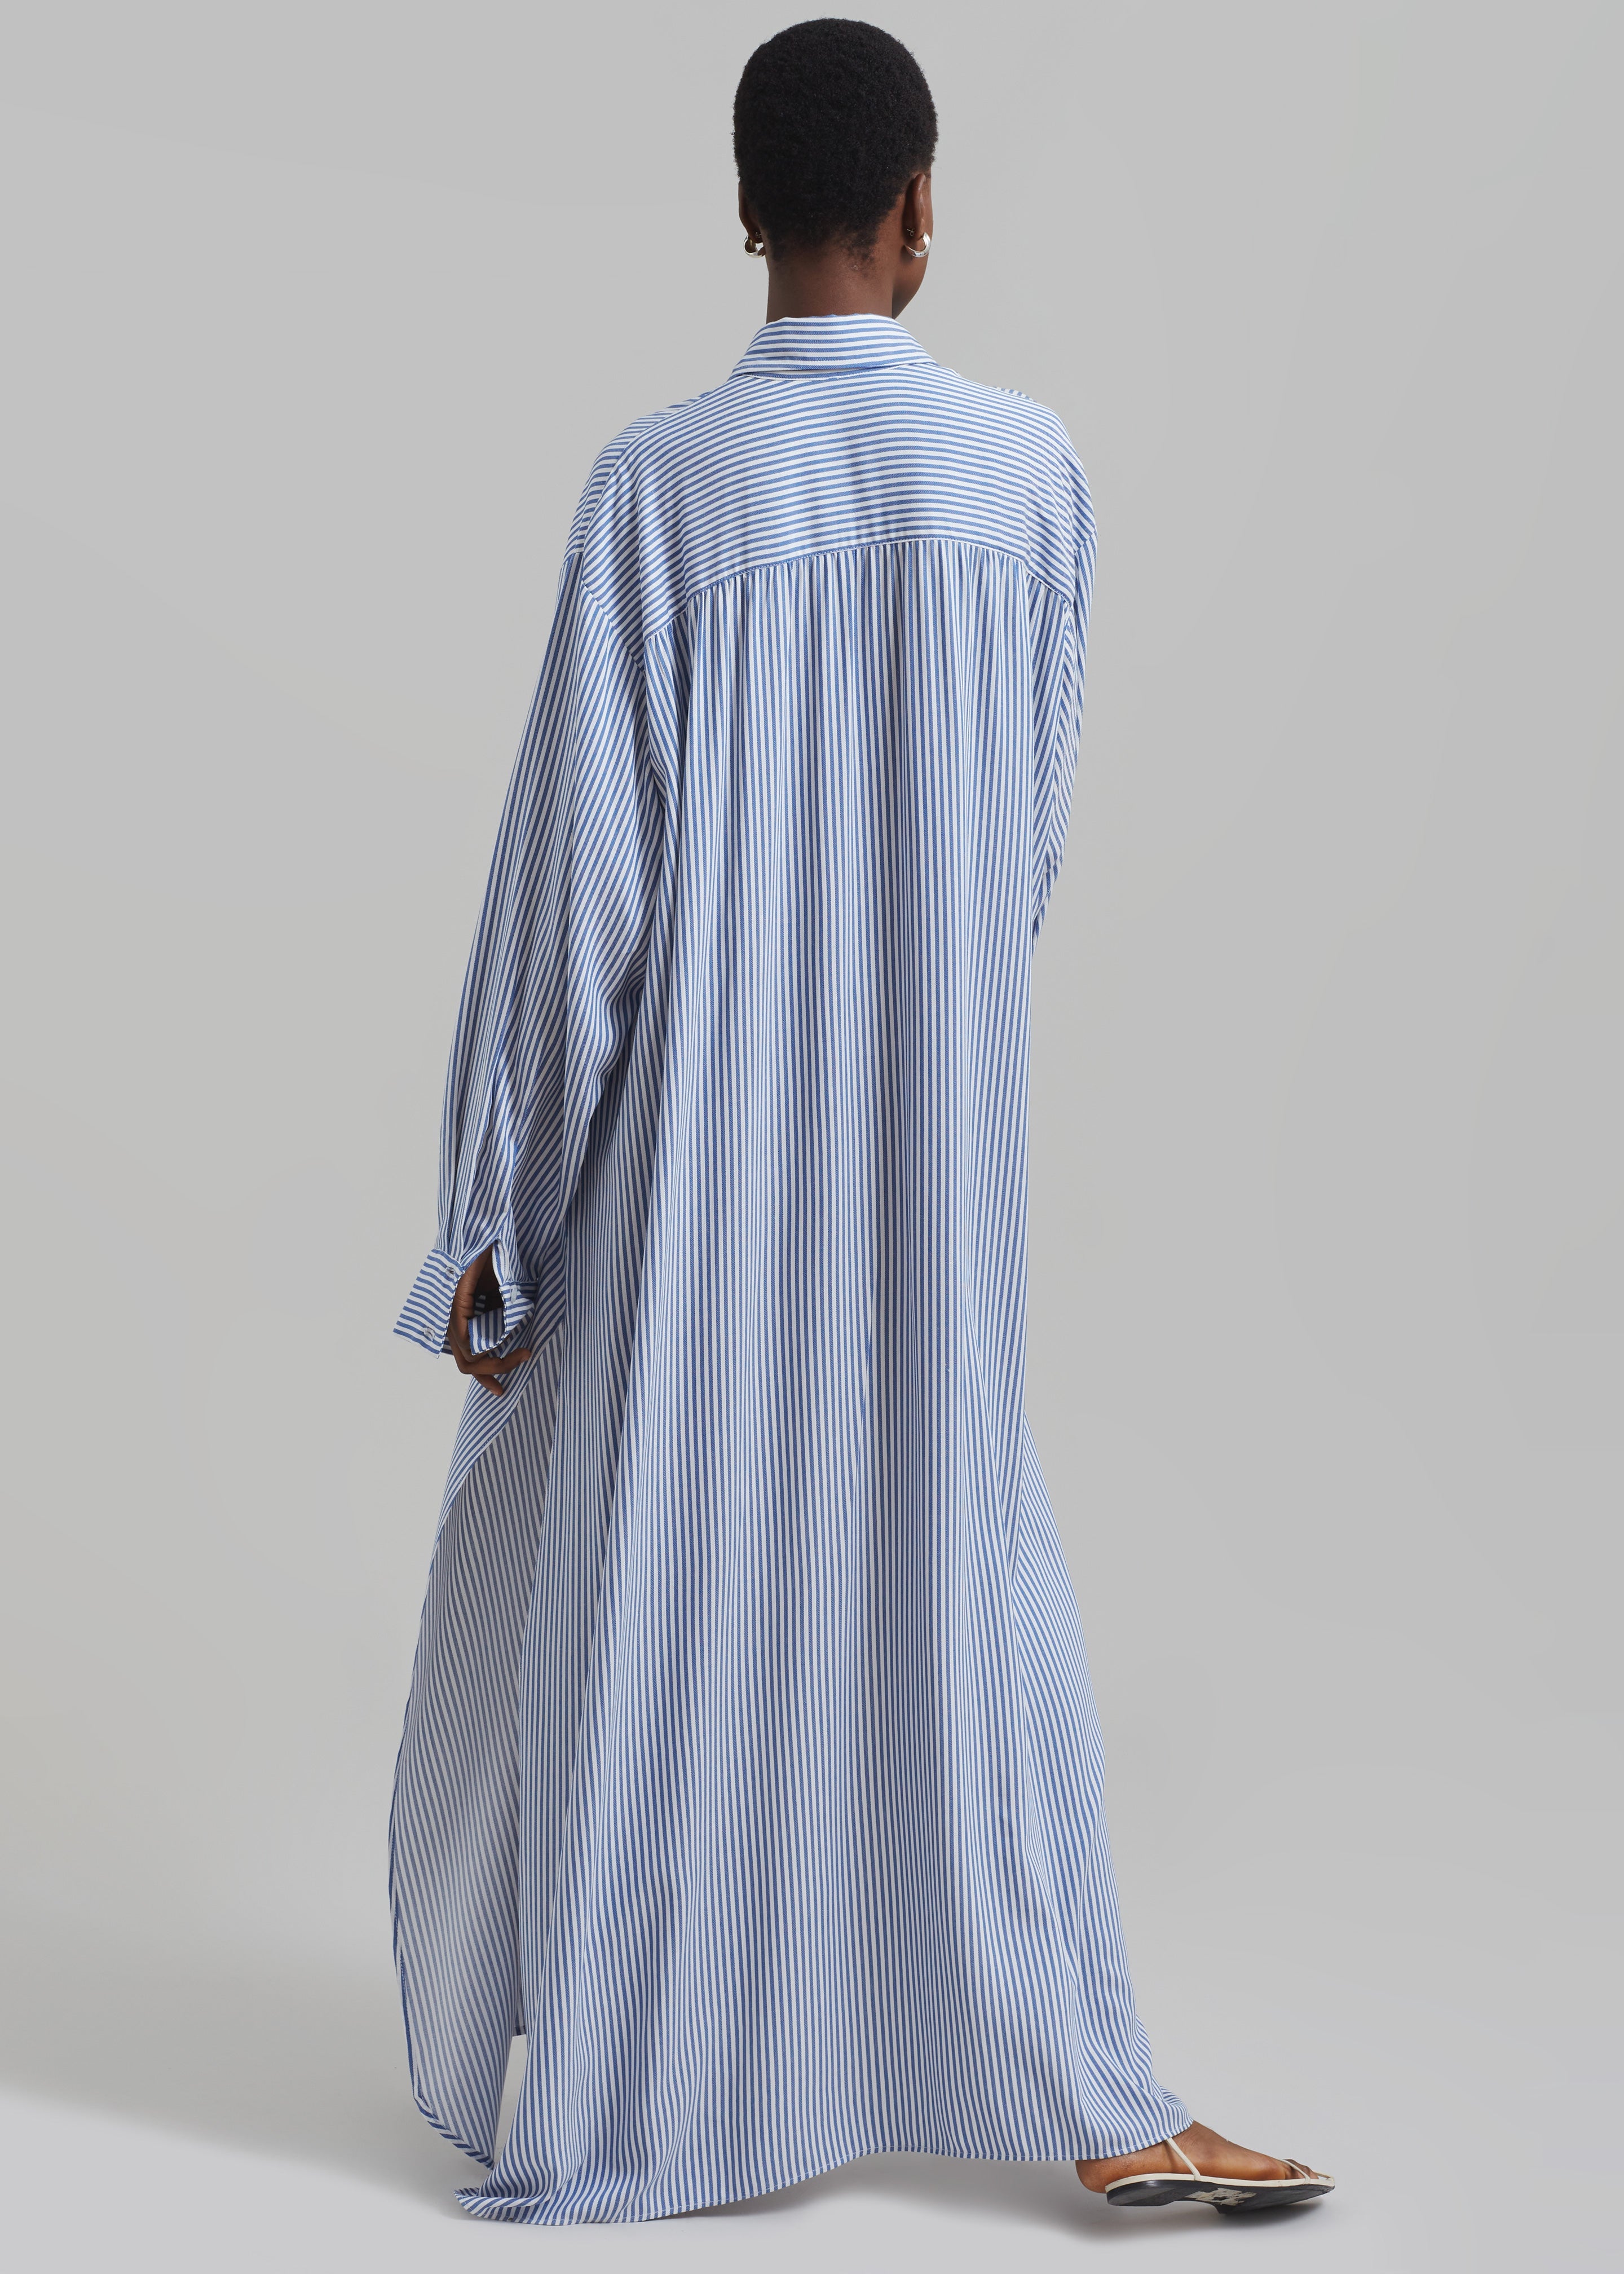 Avery Fluid Shirt Dress - White/Blue Stripe - 6